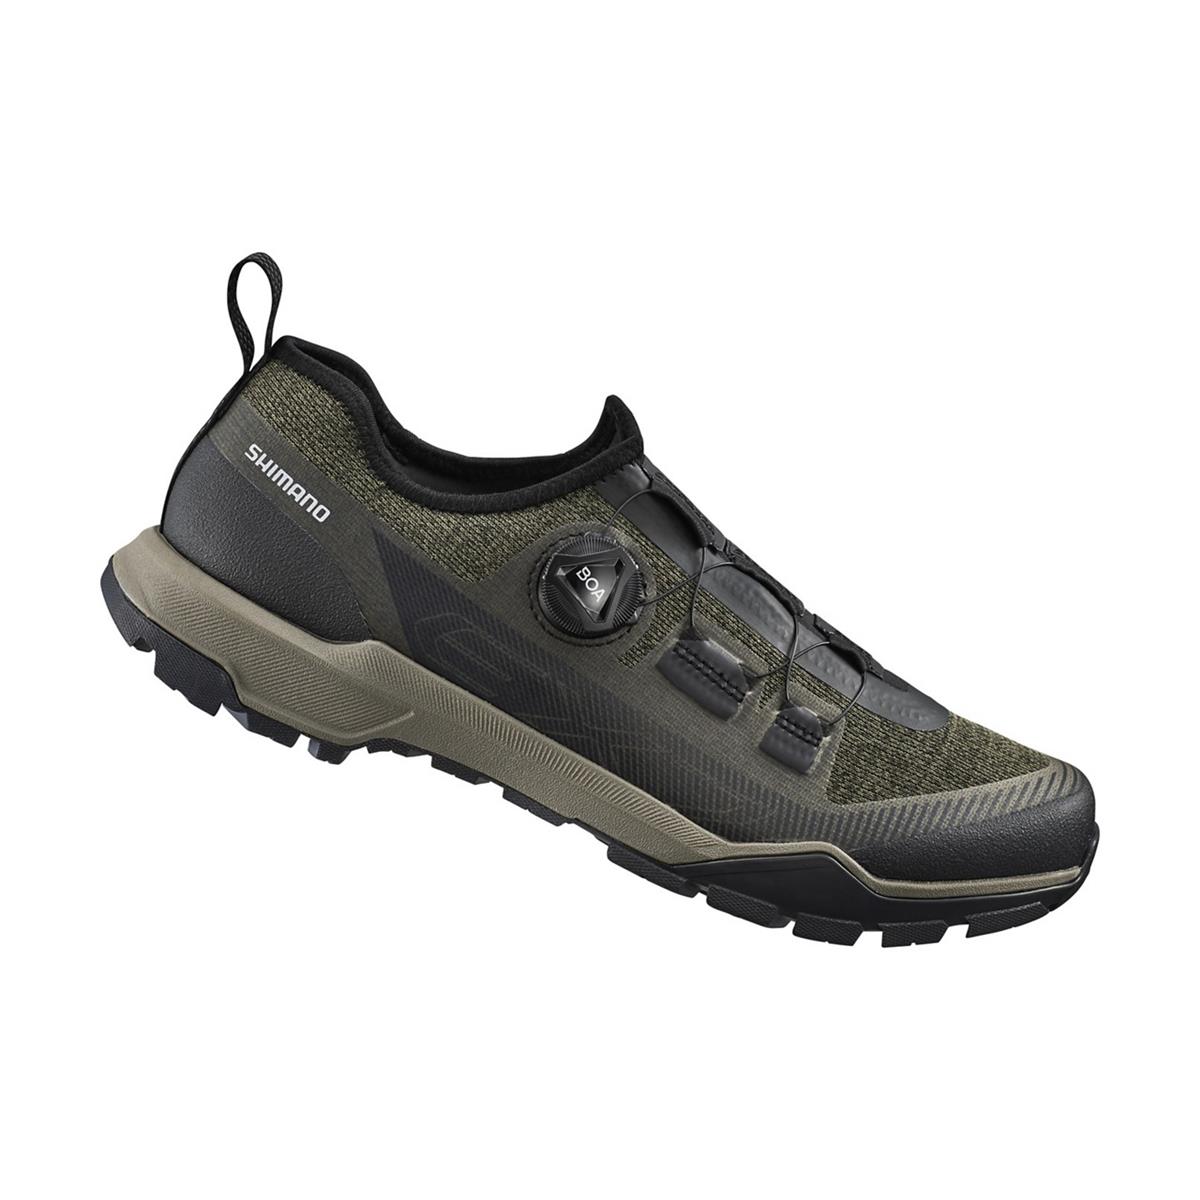 Trekking / MTB Shoes SH-EX700 Green Size 46